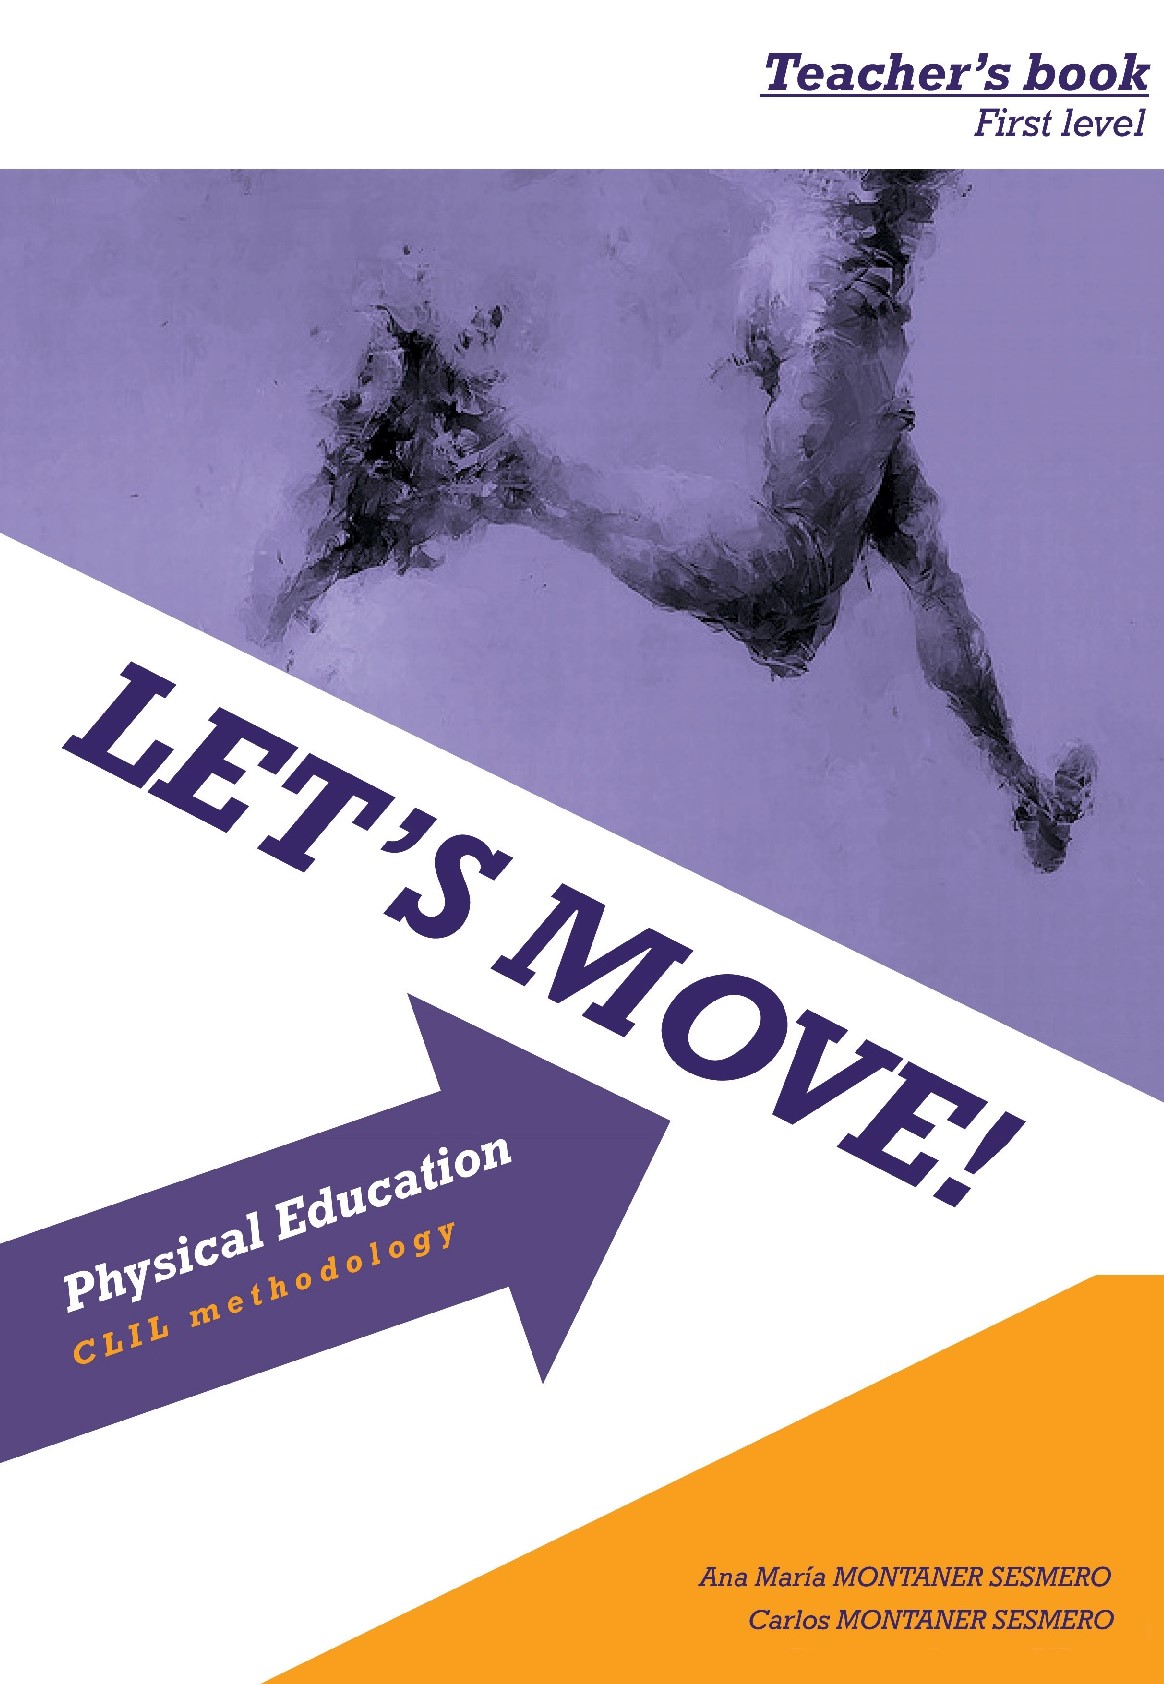 Let's move. Teacher's book 1º ESO